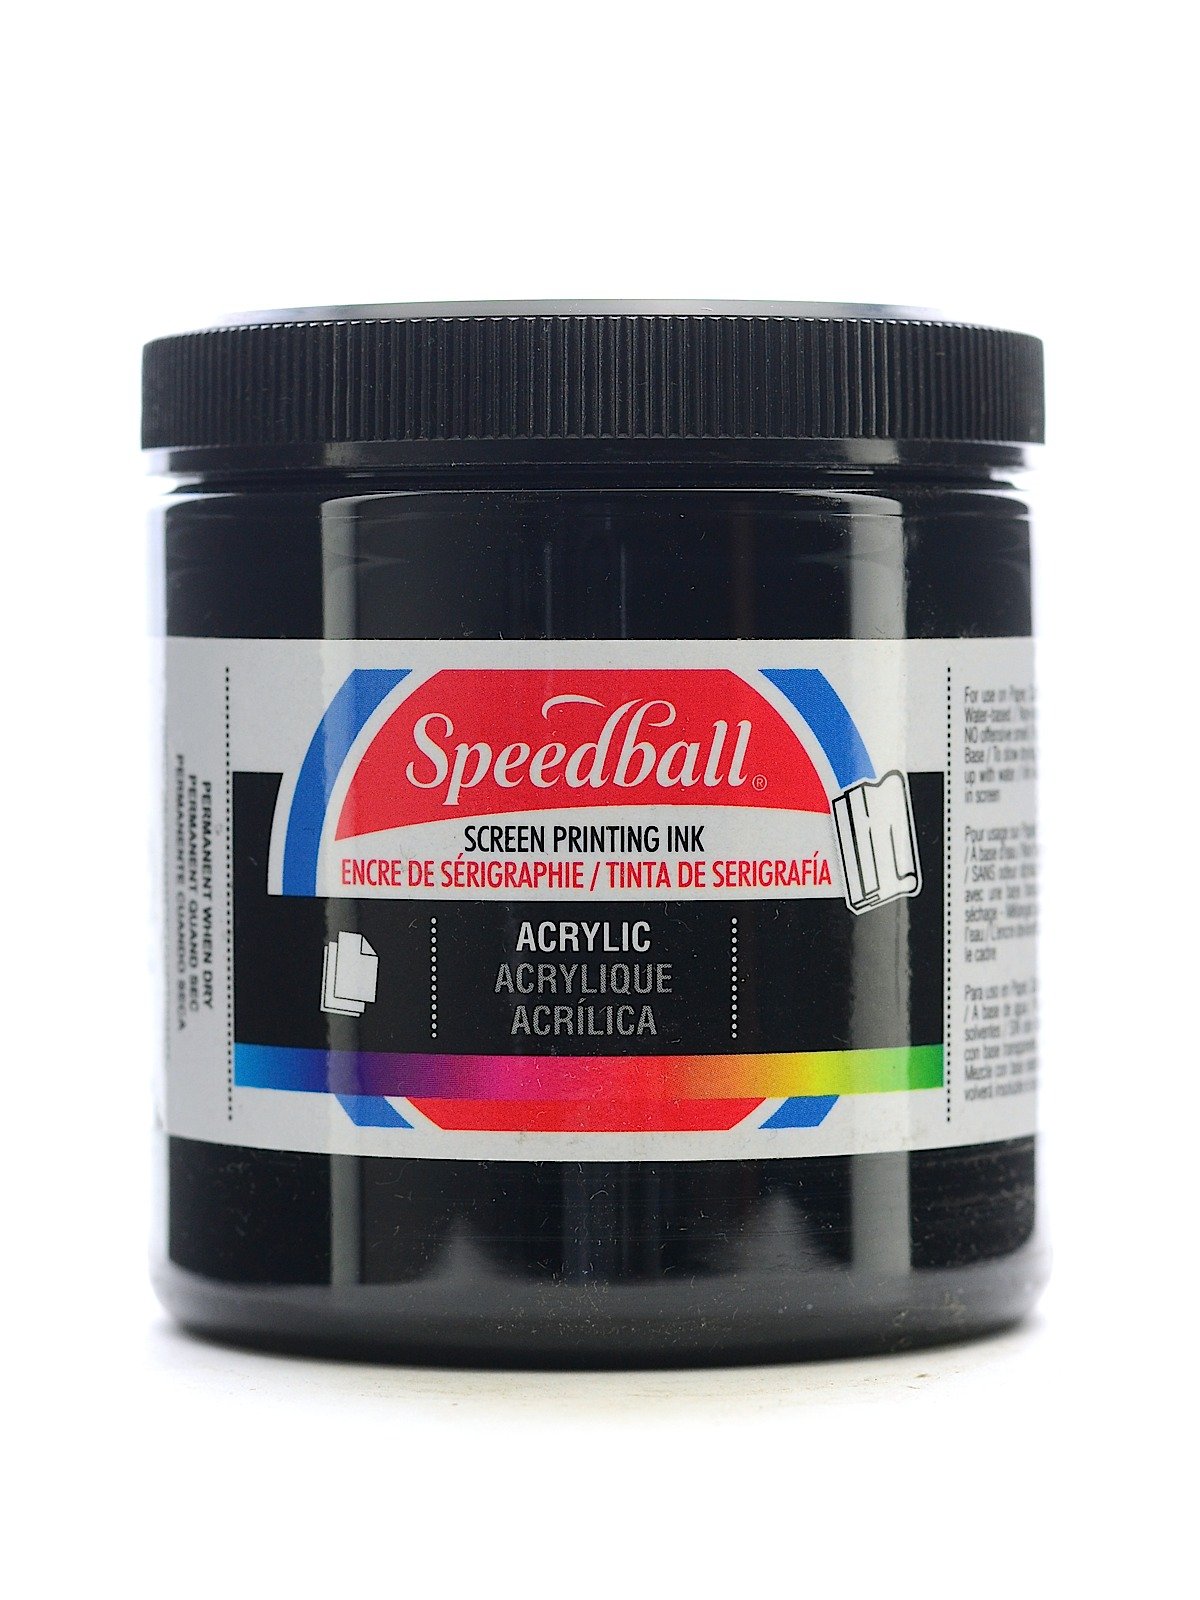 Speedball Acrylic Ink - Black - 32 oz.